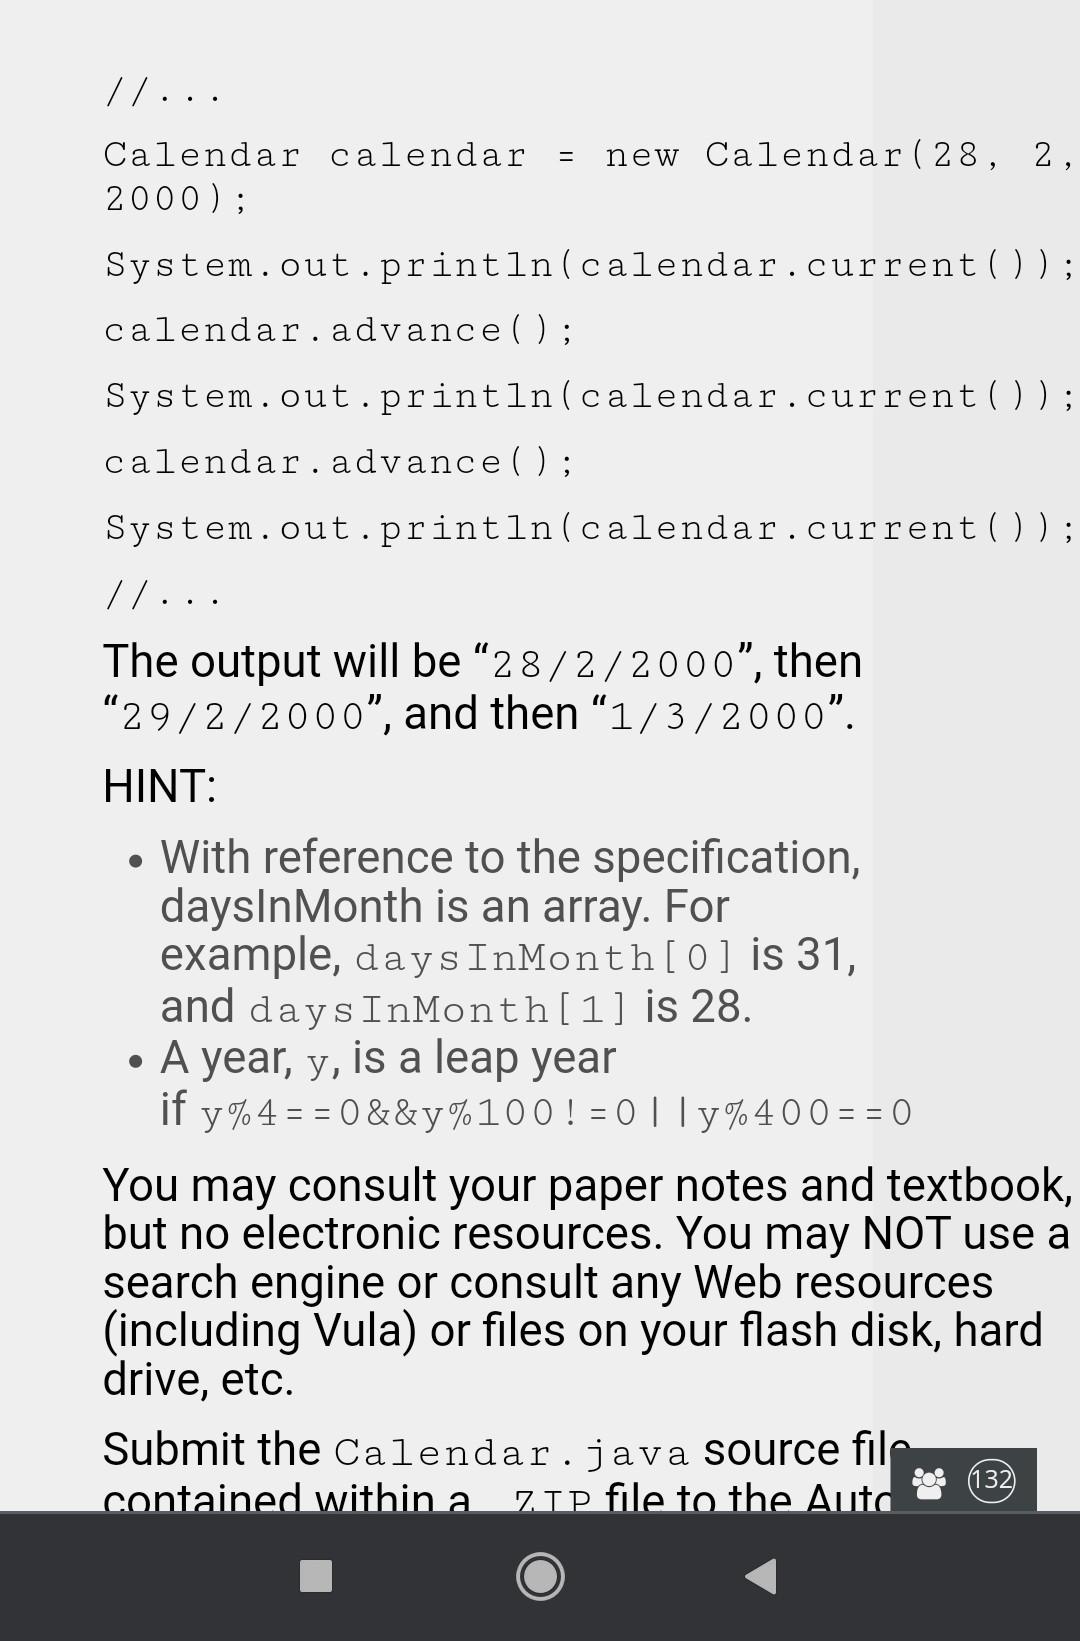 Solved Write a class called Calendar that satisfies the Chegg com